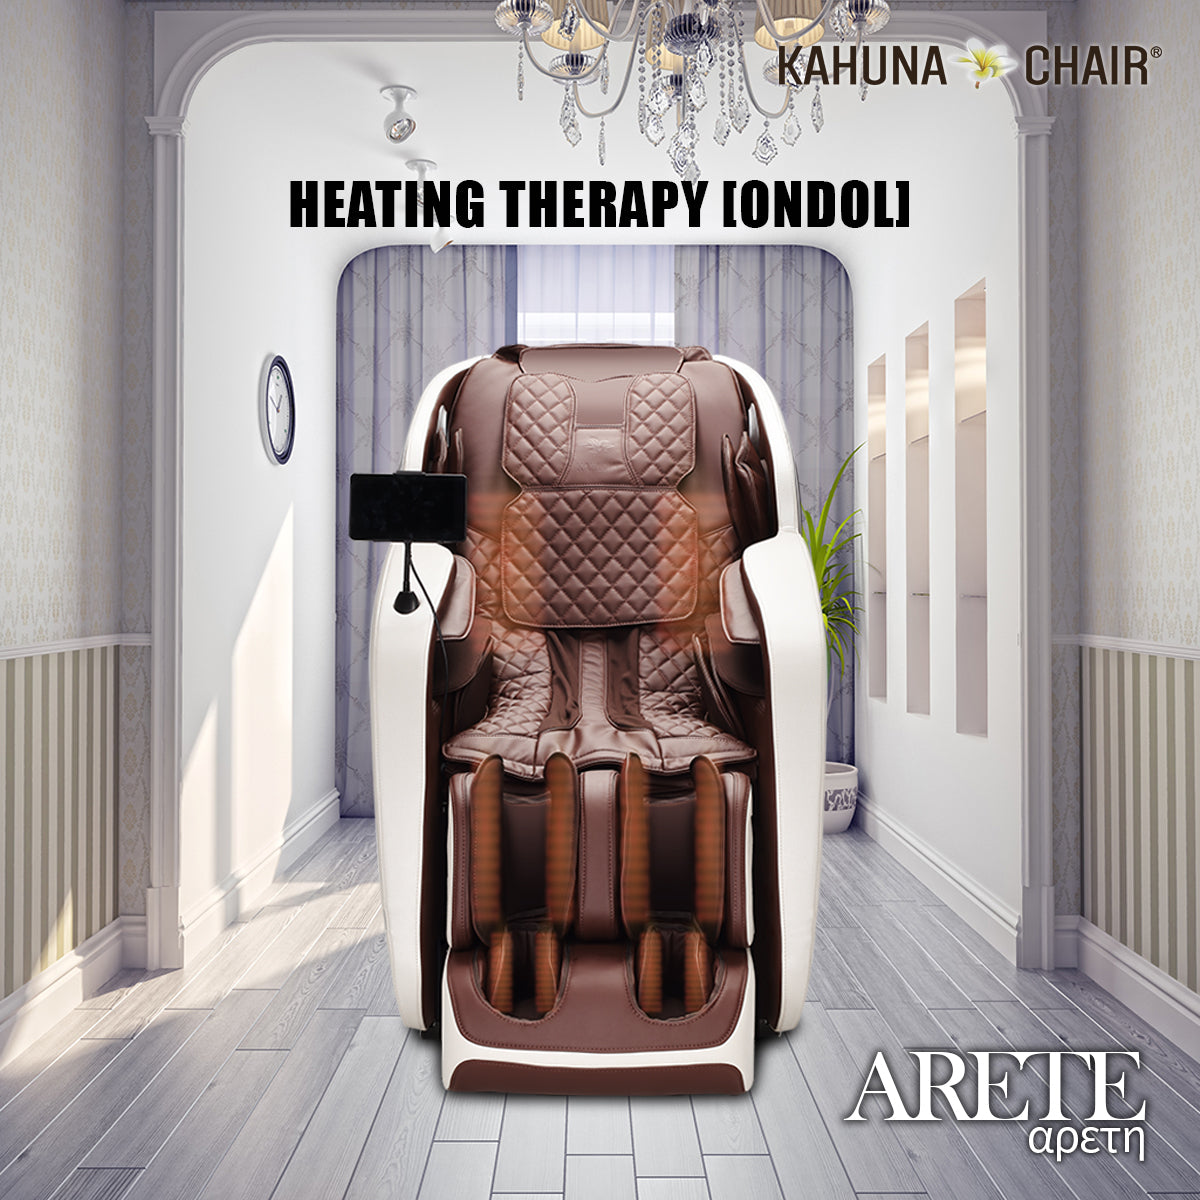 kahuna Em Arete Massage chair heating therapy ondol